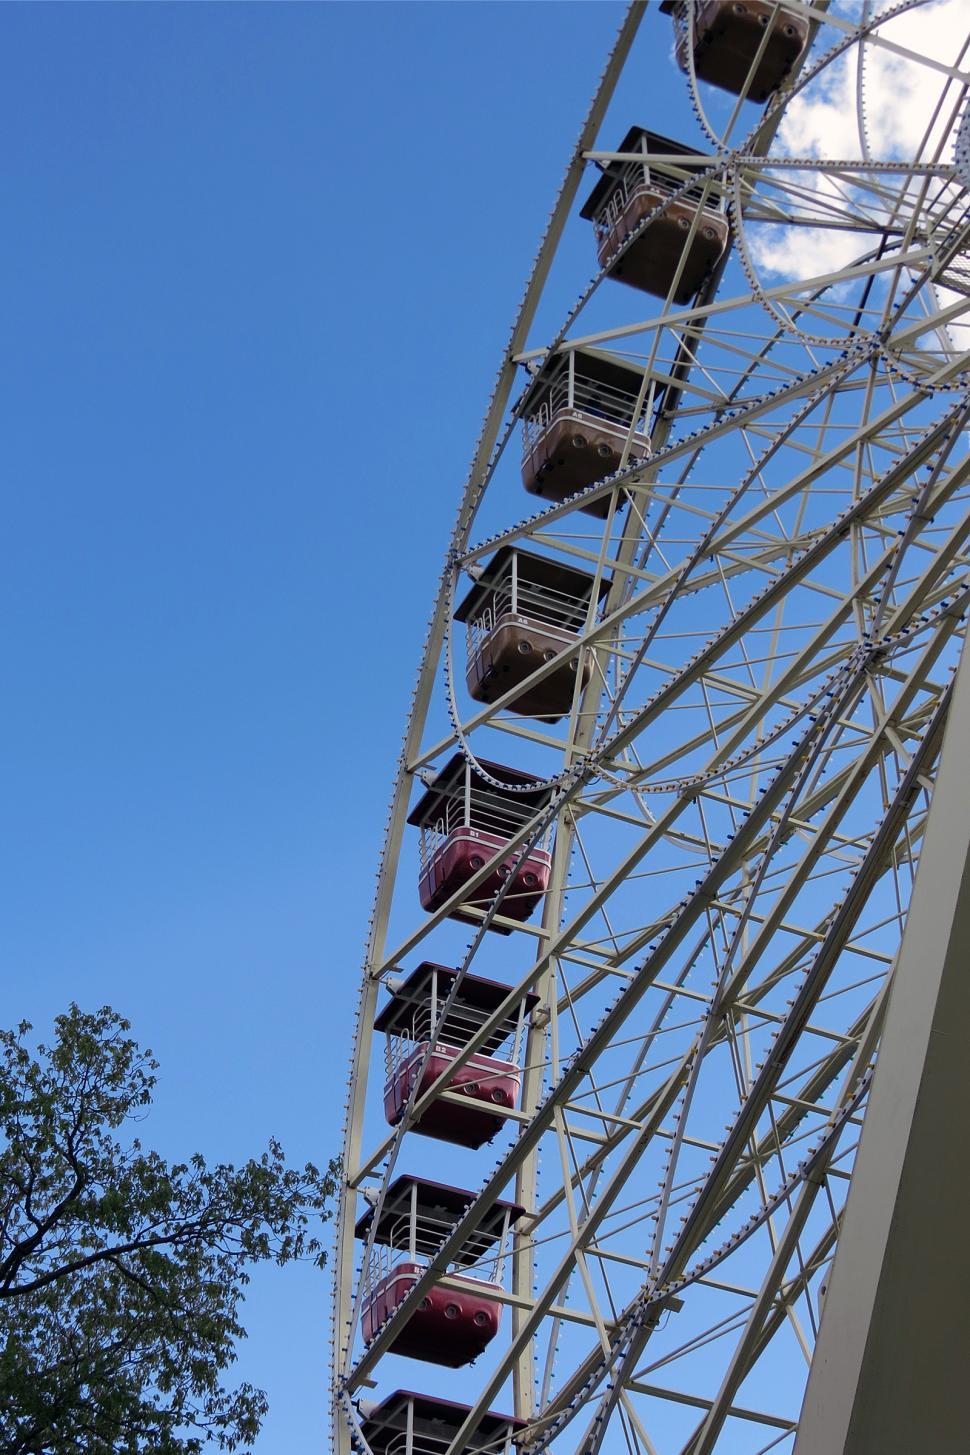 Free Image of Ferris Wheel Over Blue Sky 